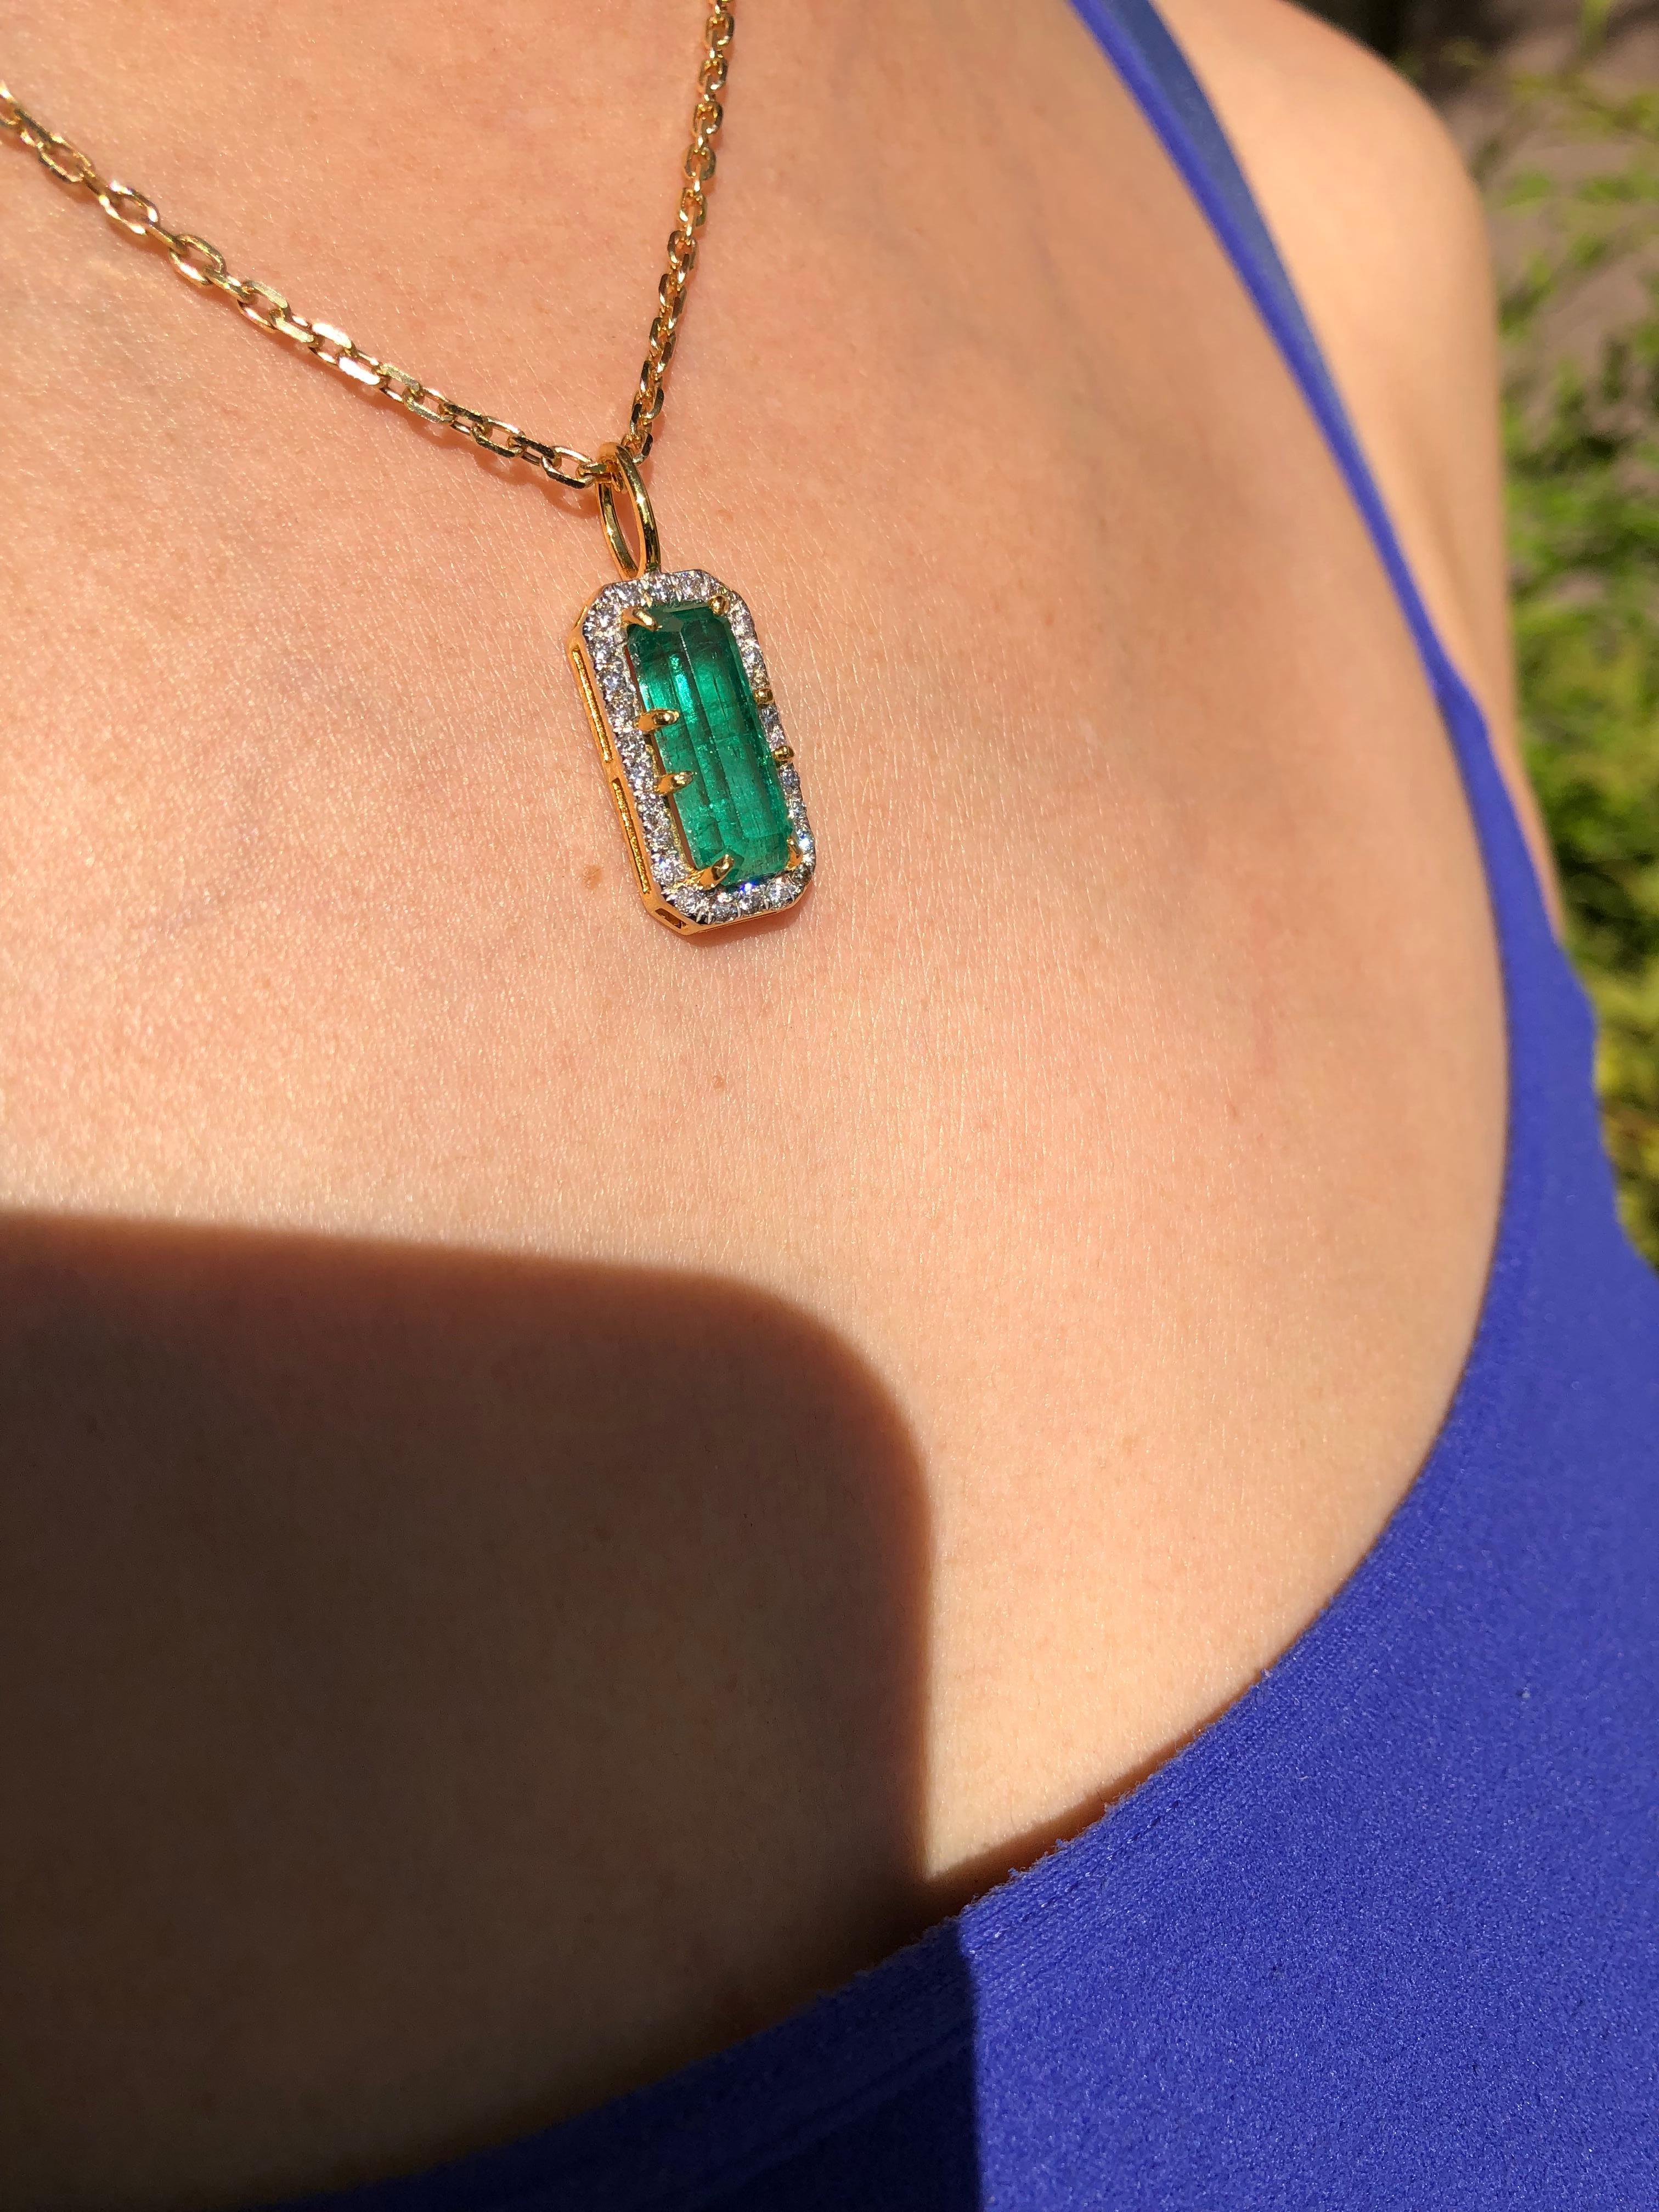 Stunning 4.72 Afghan Emerald Pendant with Diamond Halo 6